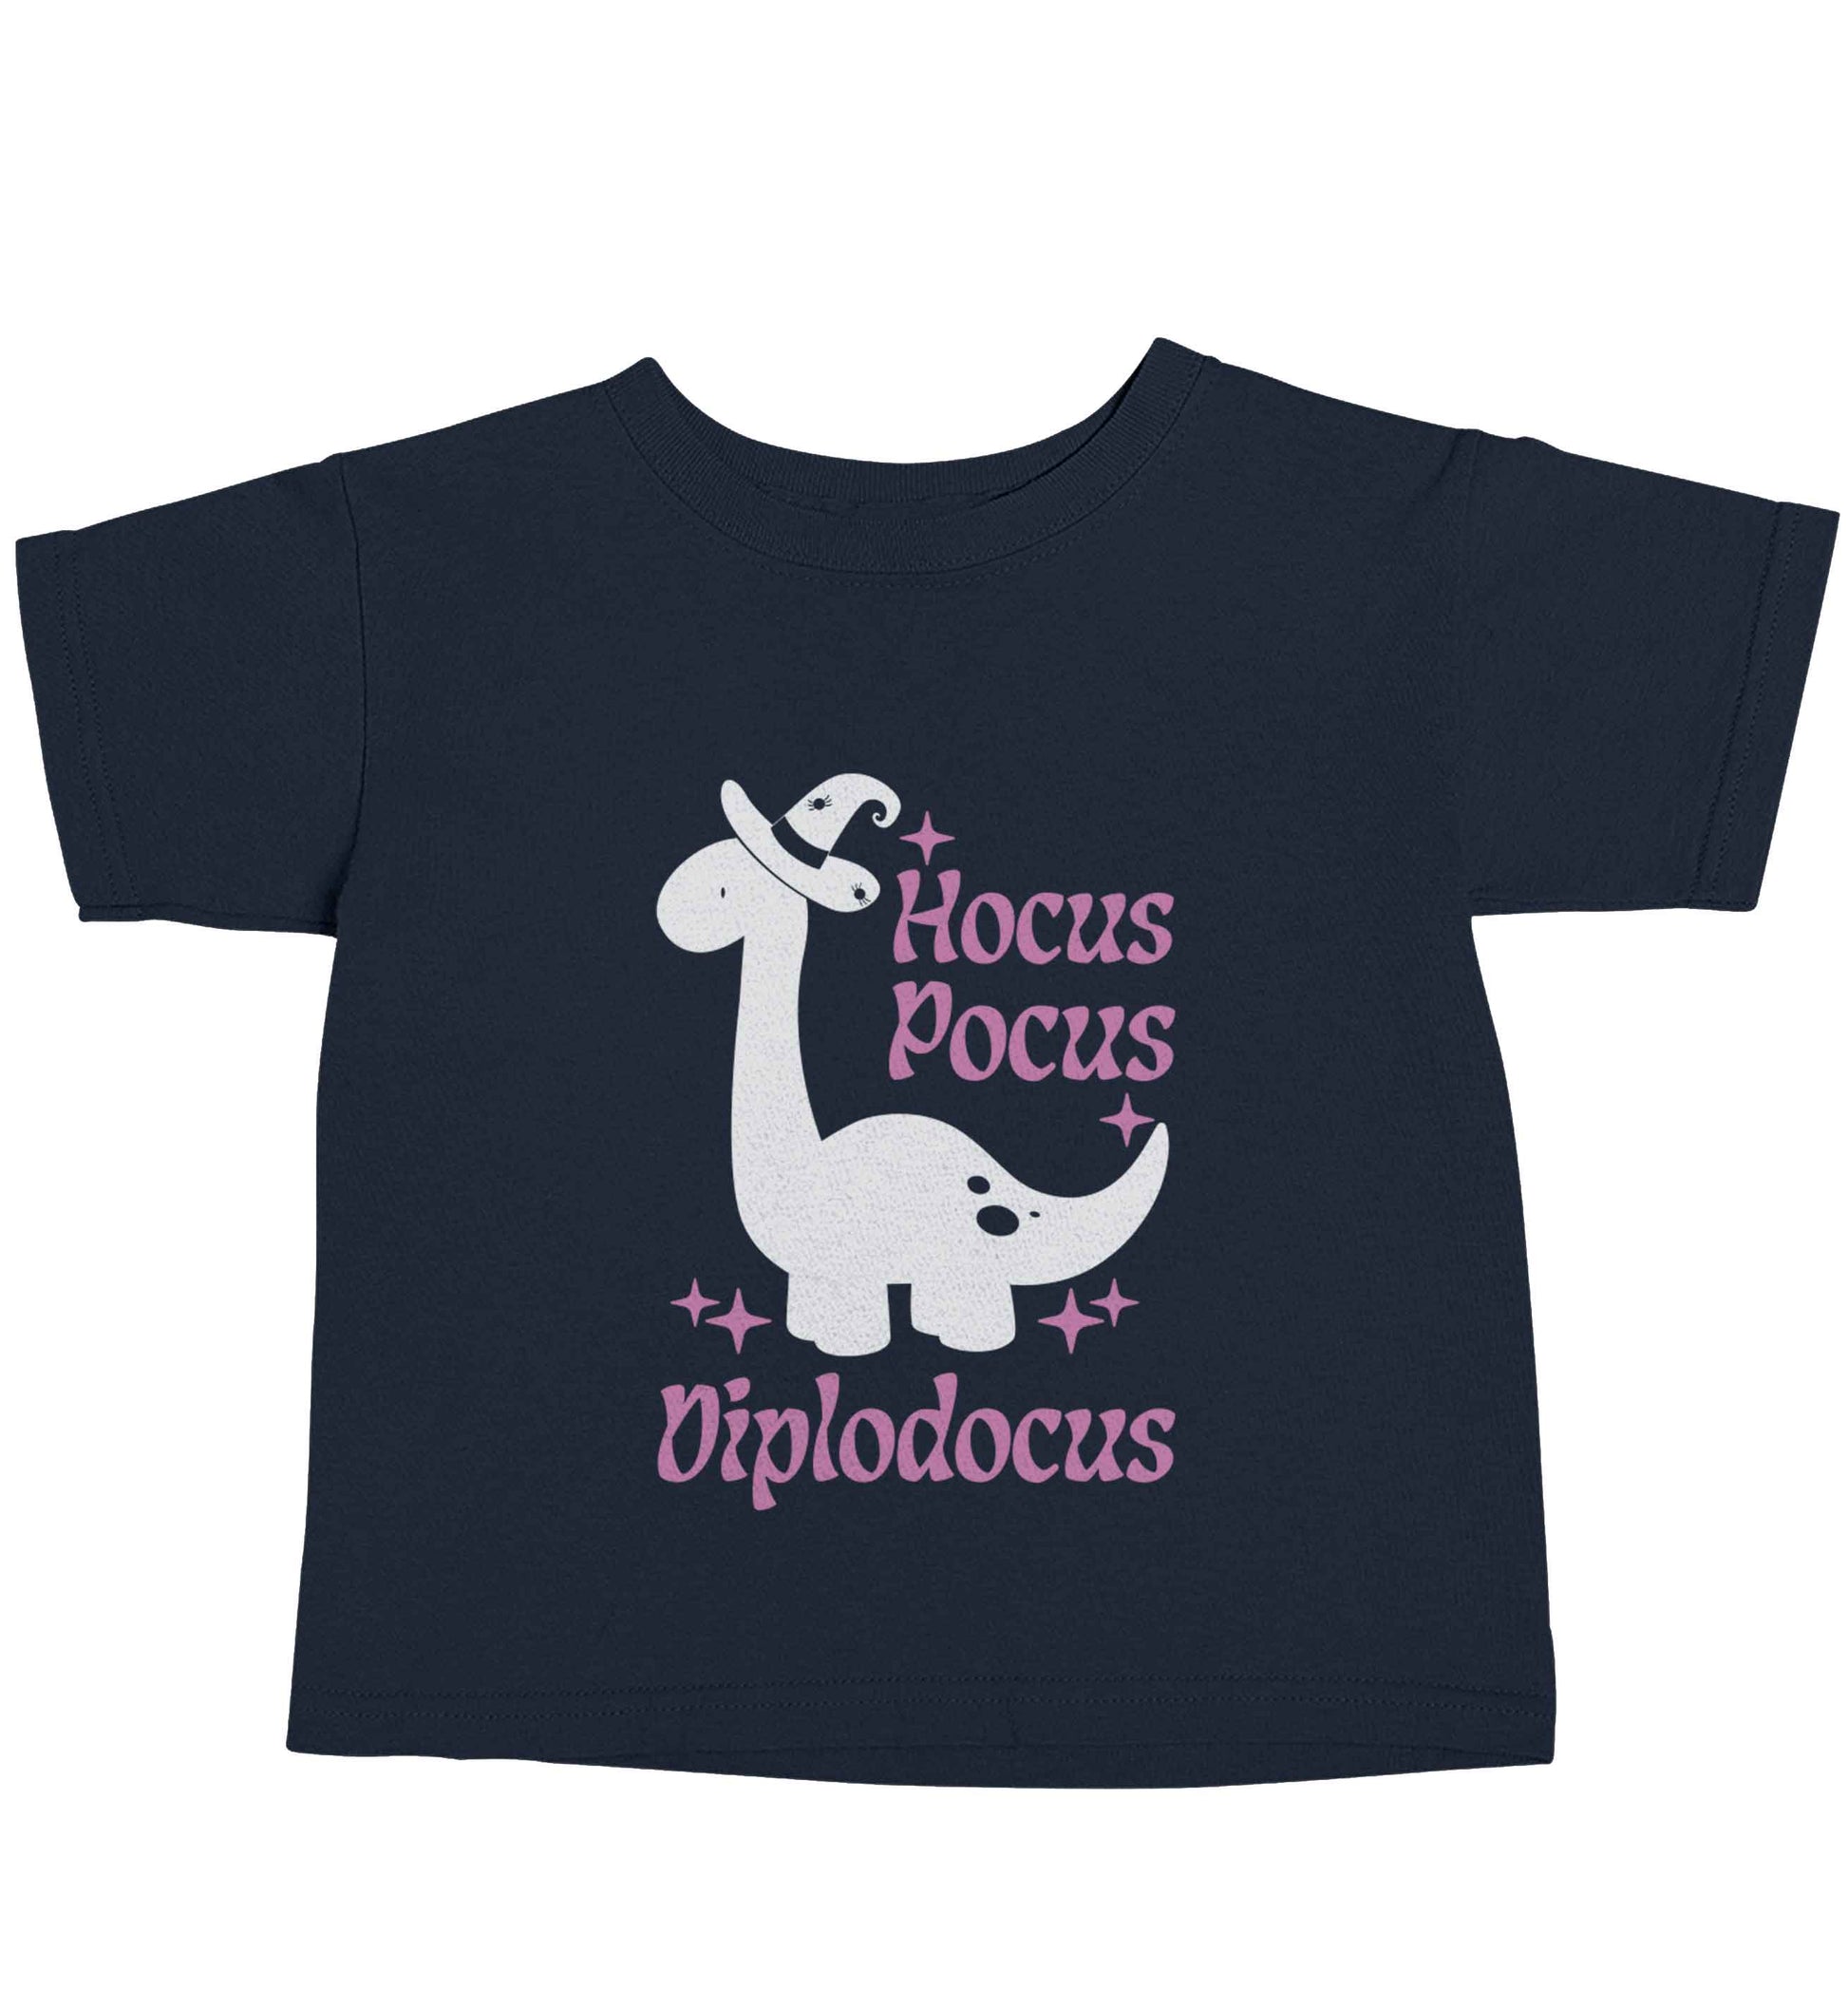 Hocus pocus diplodocus Kit navy baby toddler Tshirt 2 Years